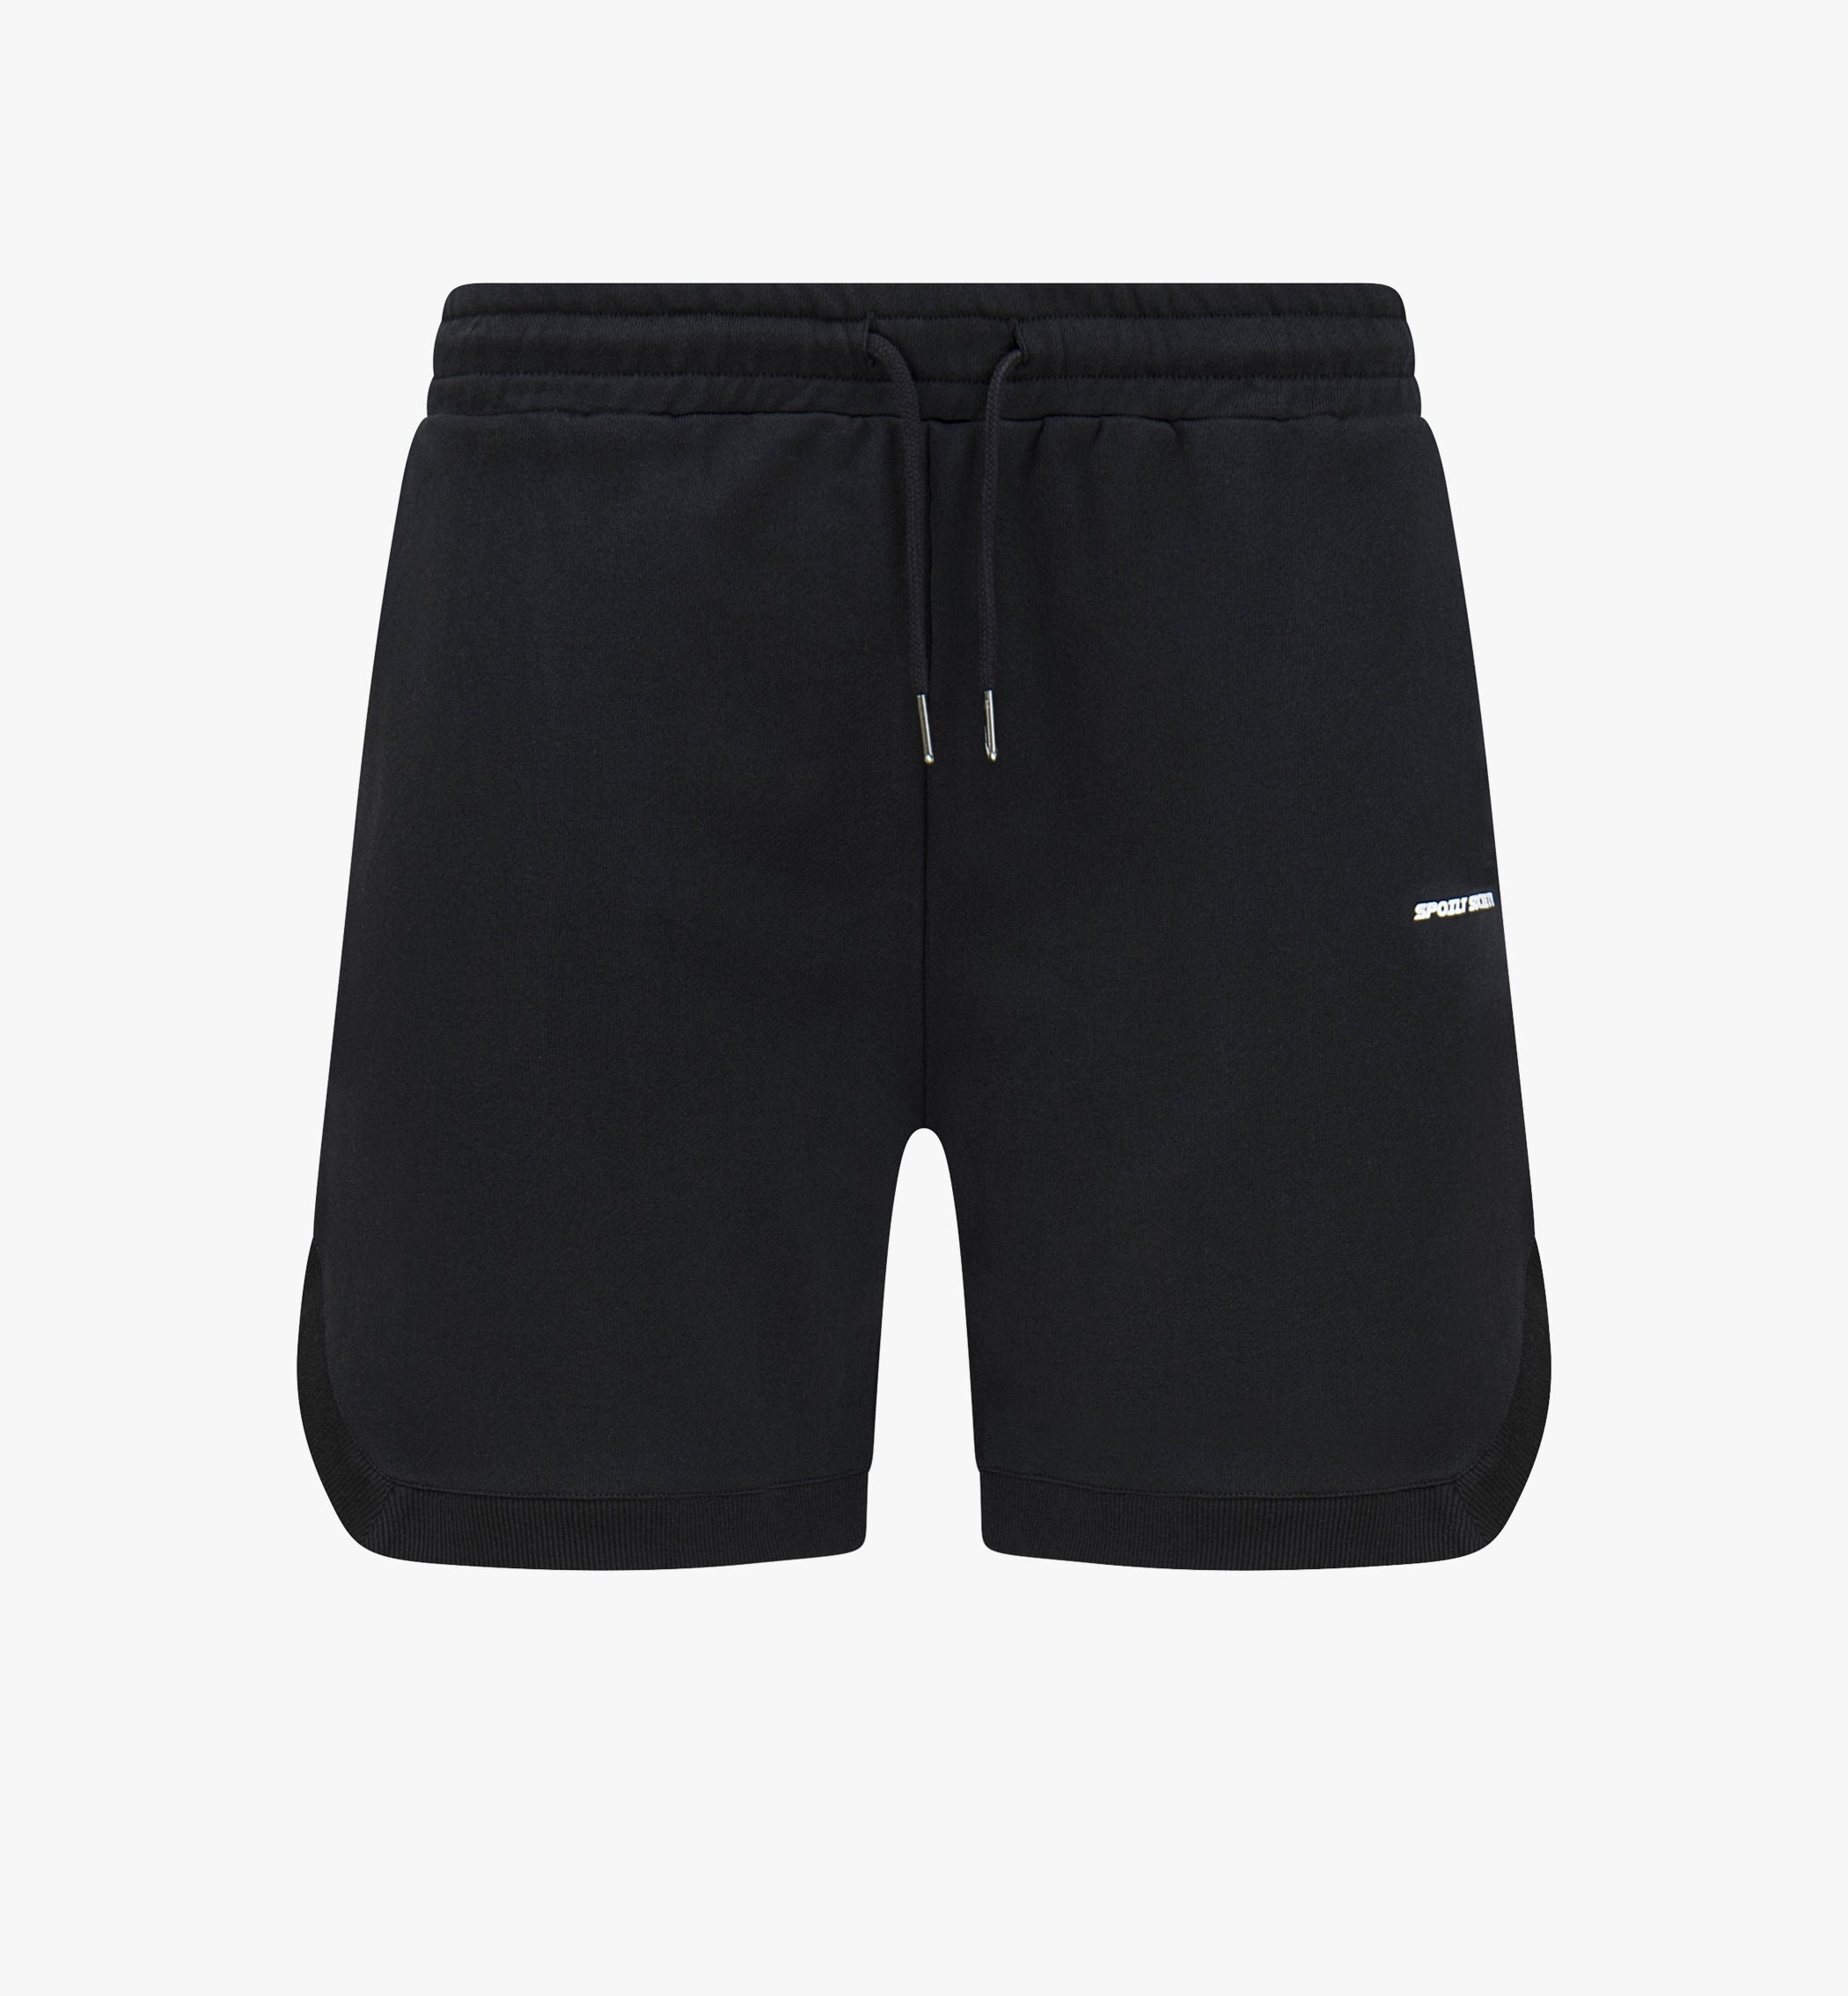 Shorts 1.0